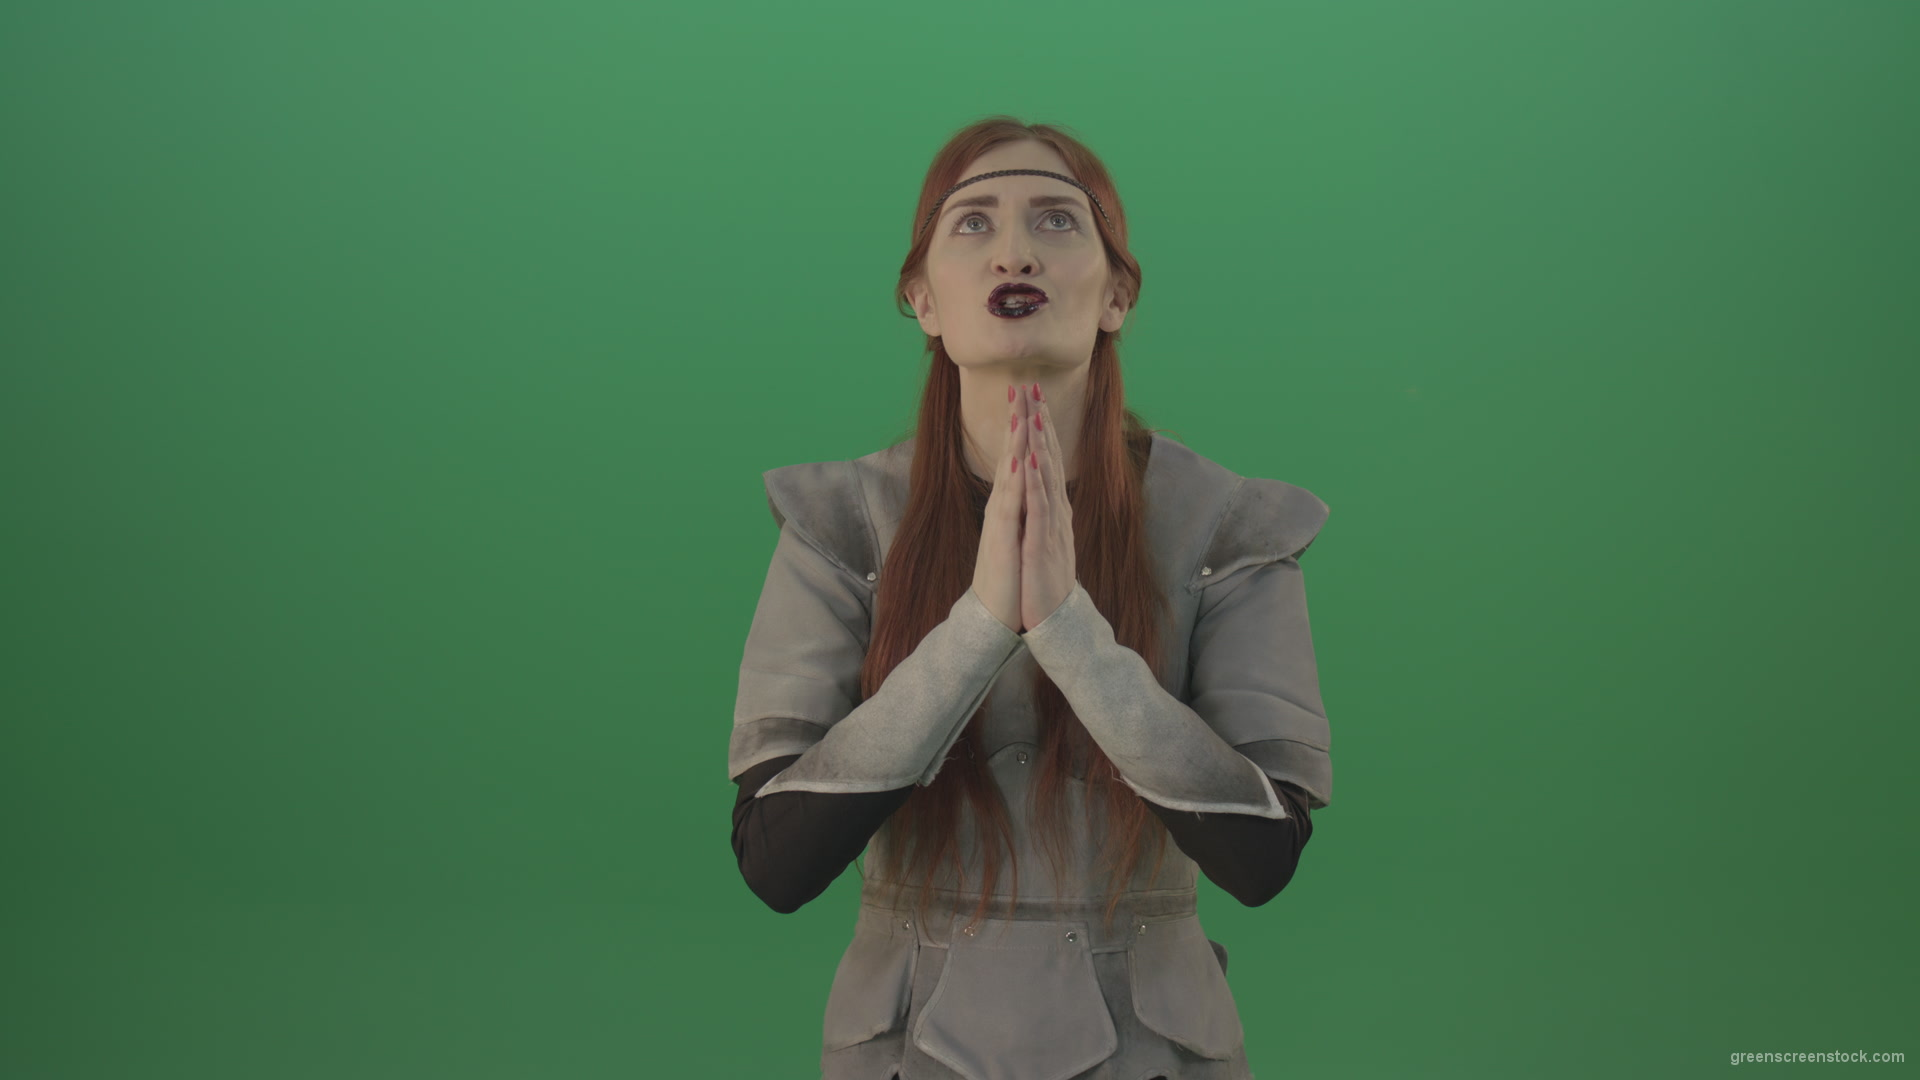 Red-hair-girl-praying-god-in-medieval-warrior-costume-in-green-screen-studio_006 Green Screen Stock